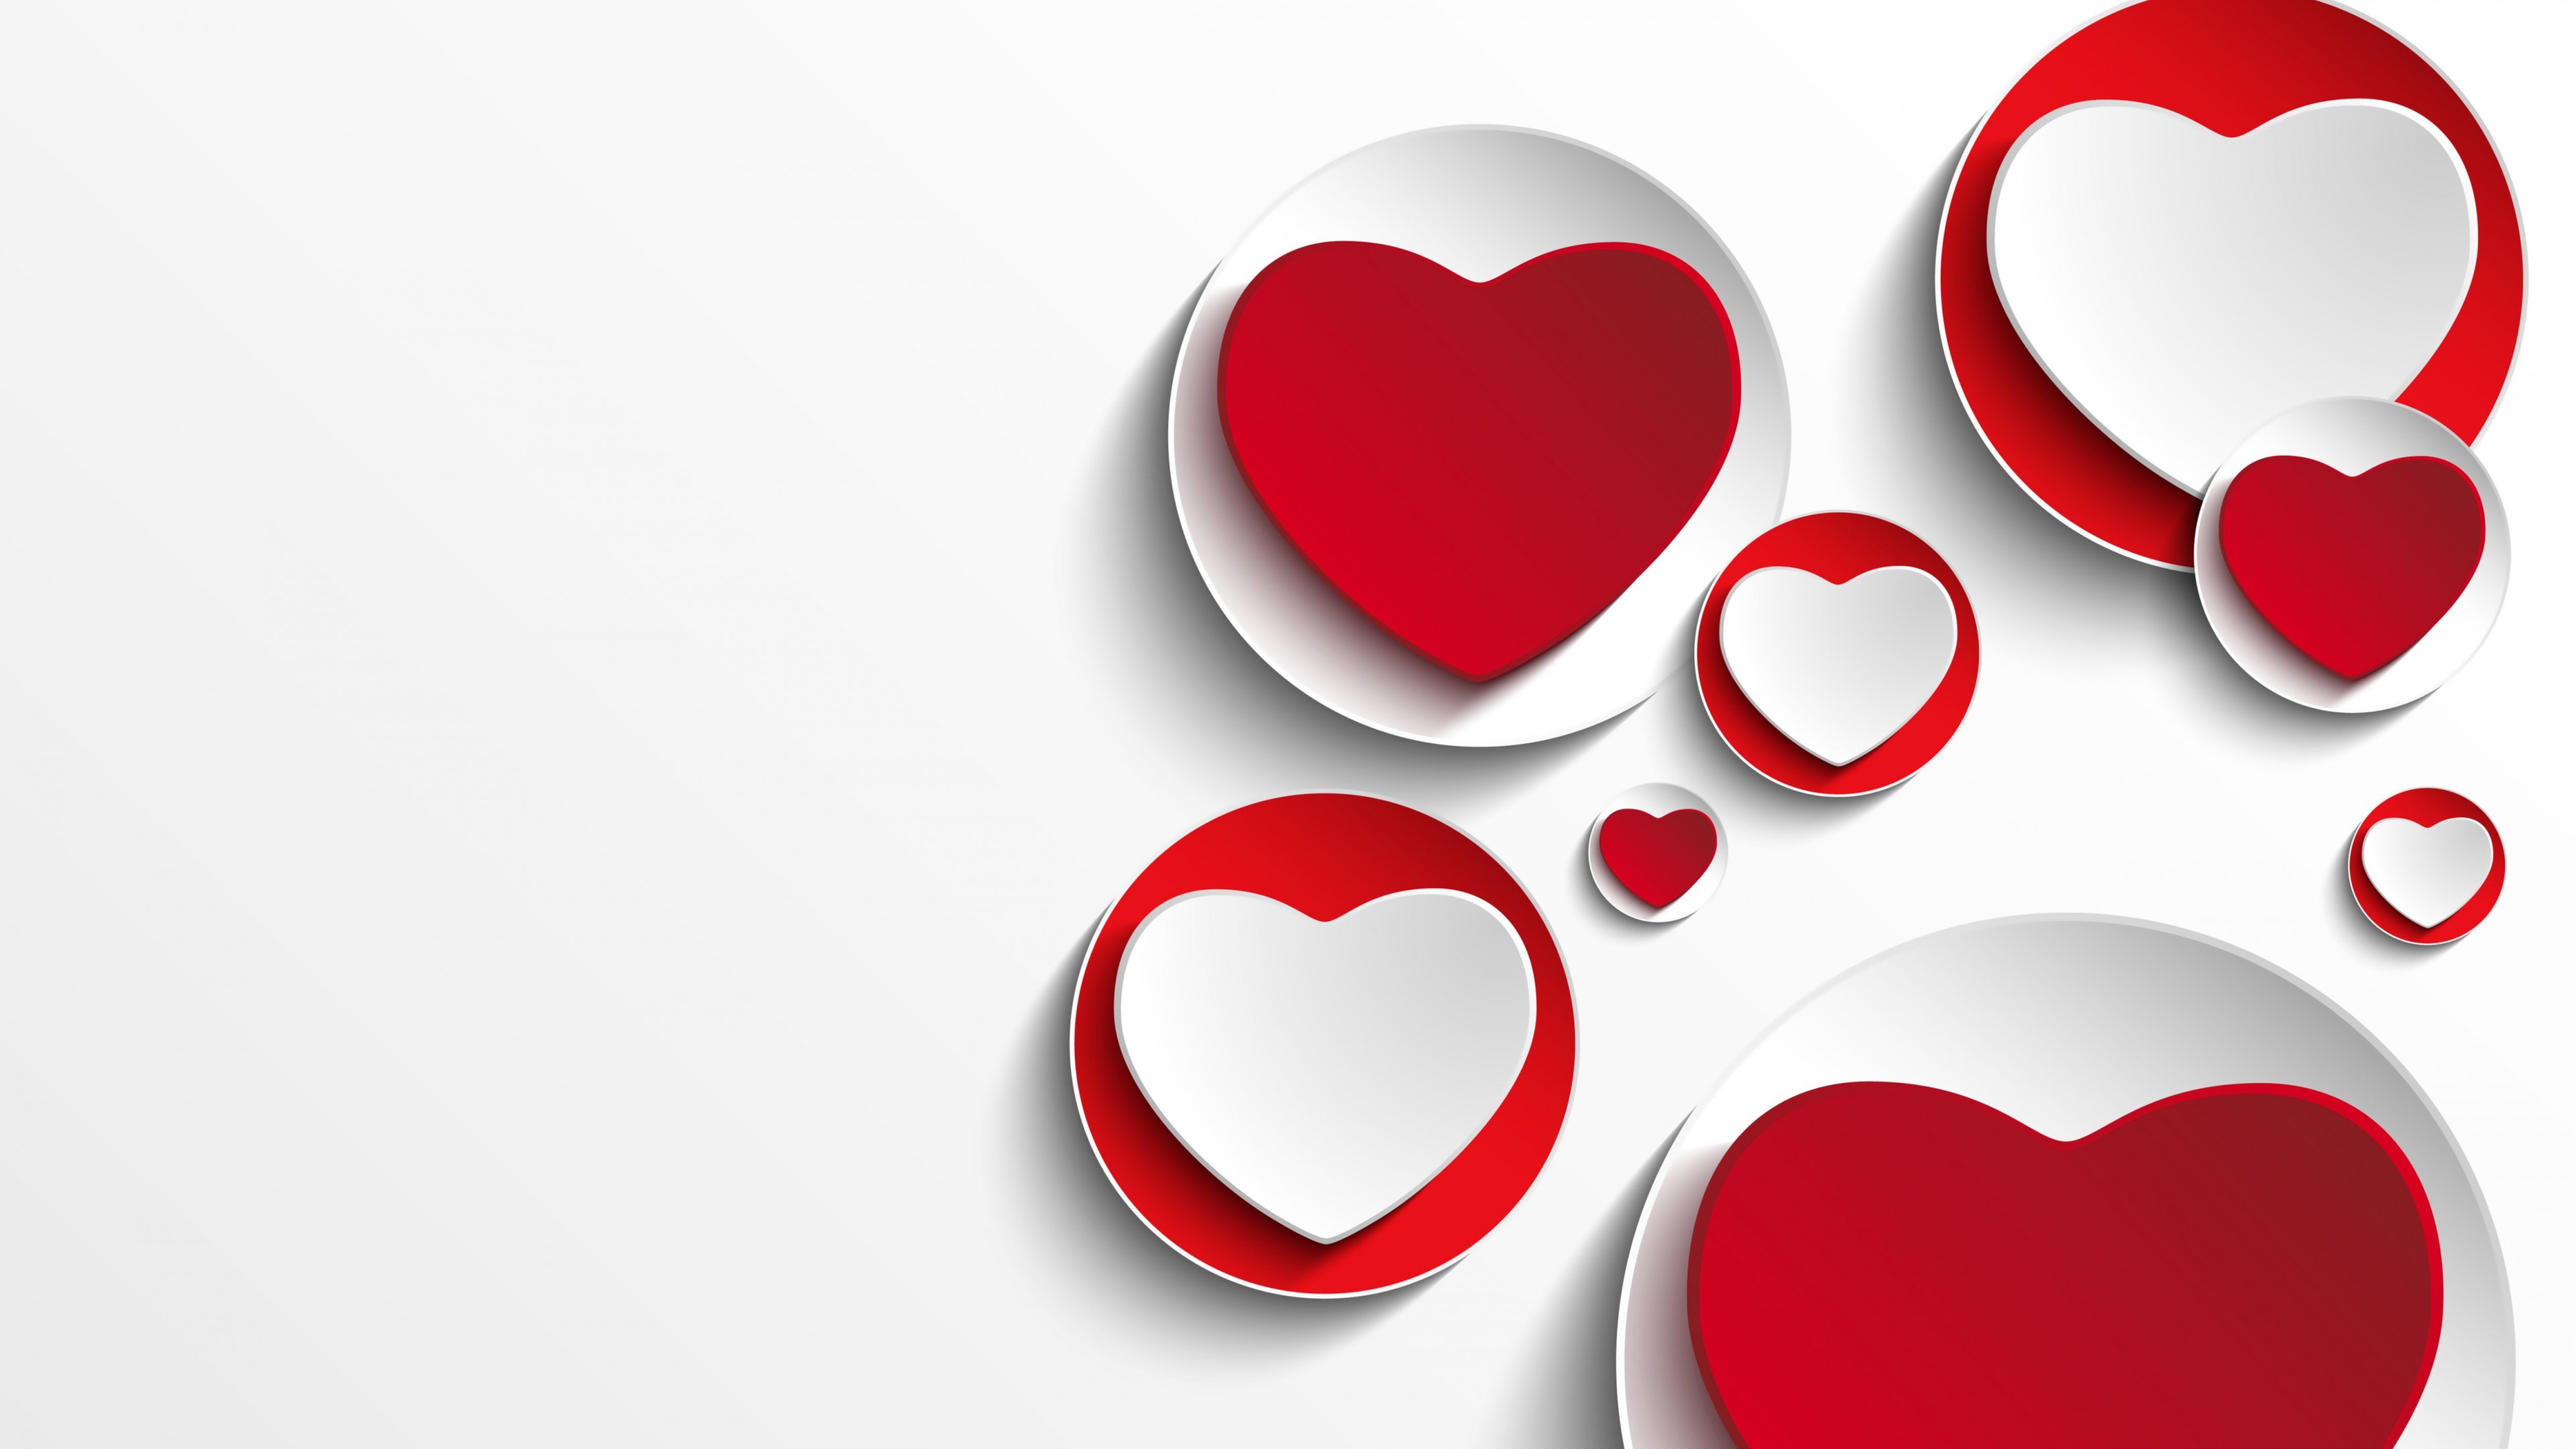 Minimalistic Hearts Shapes Wallpaper for Desktop 4K 3840x2160